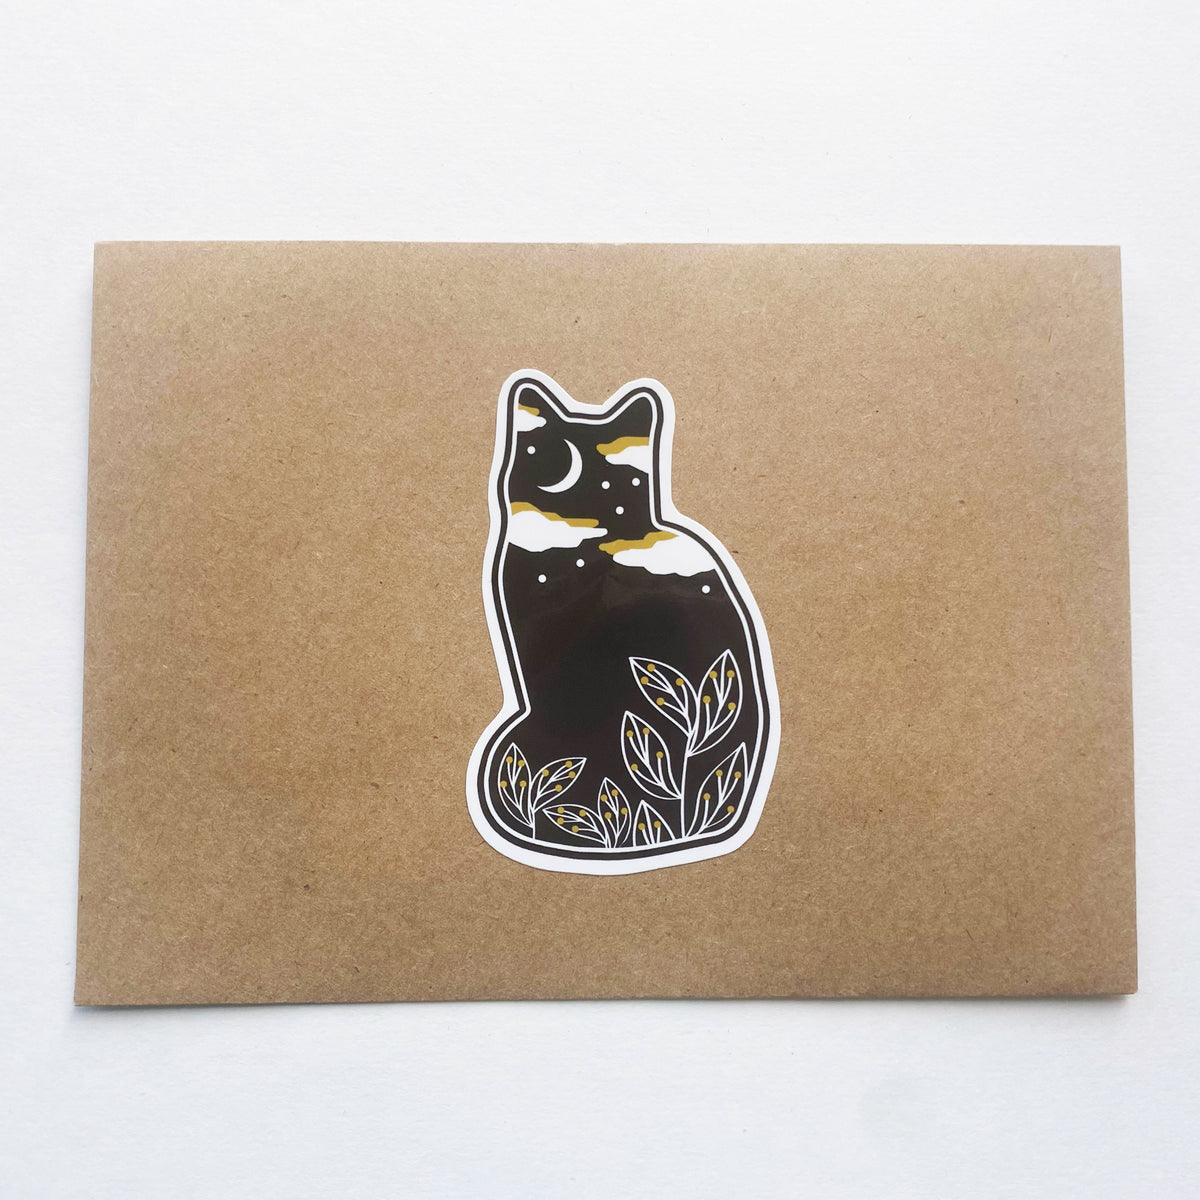 Nature Botanical Black Cat Decal Vinyl Sticker